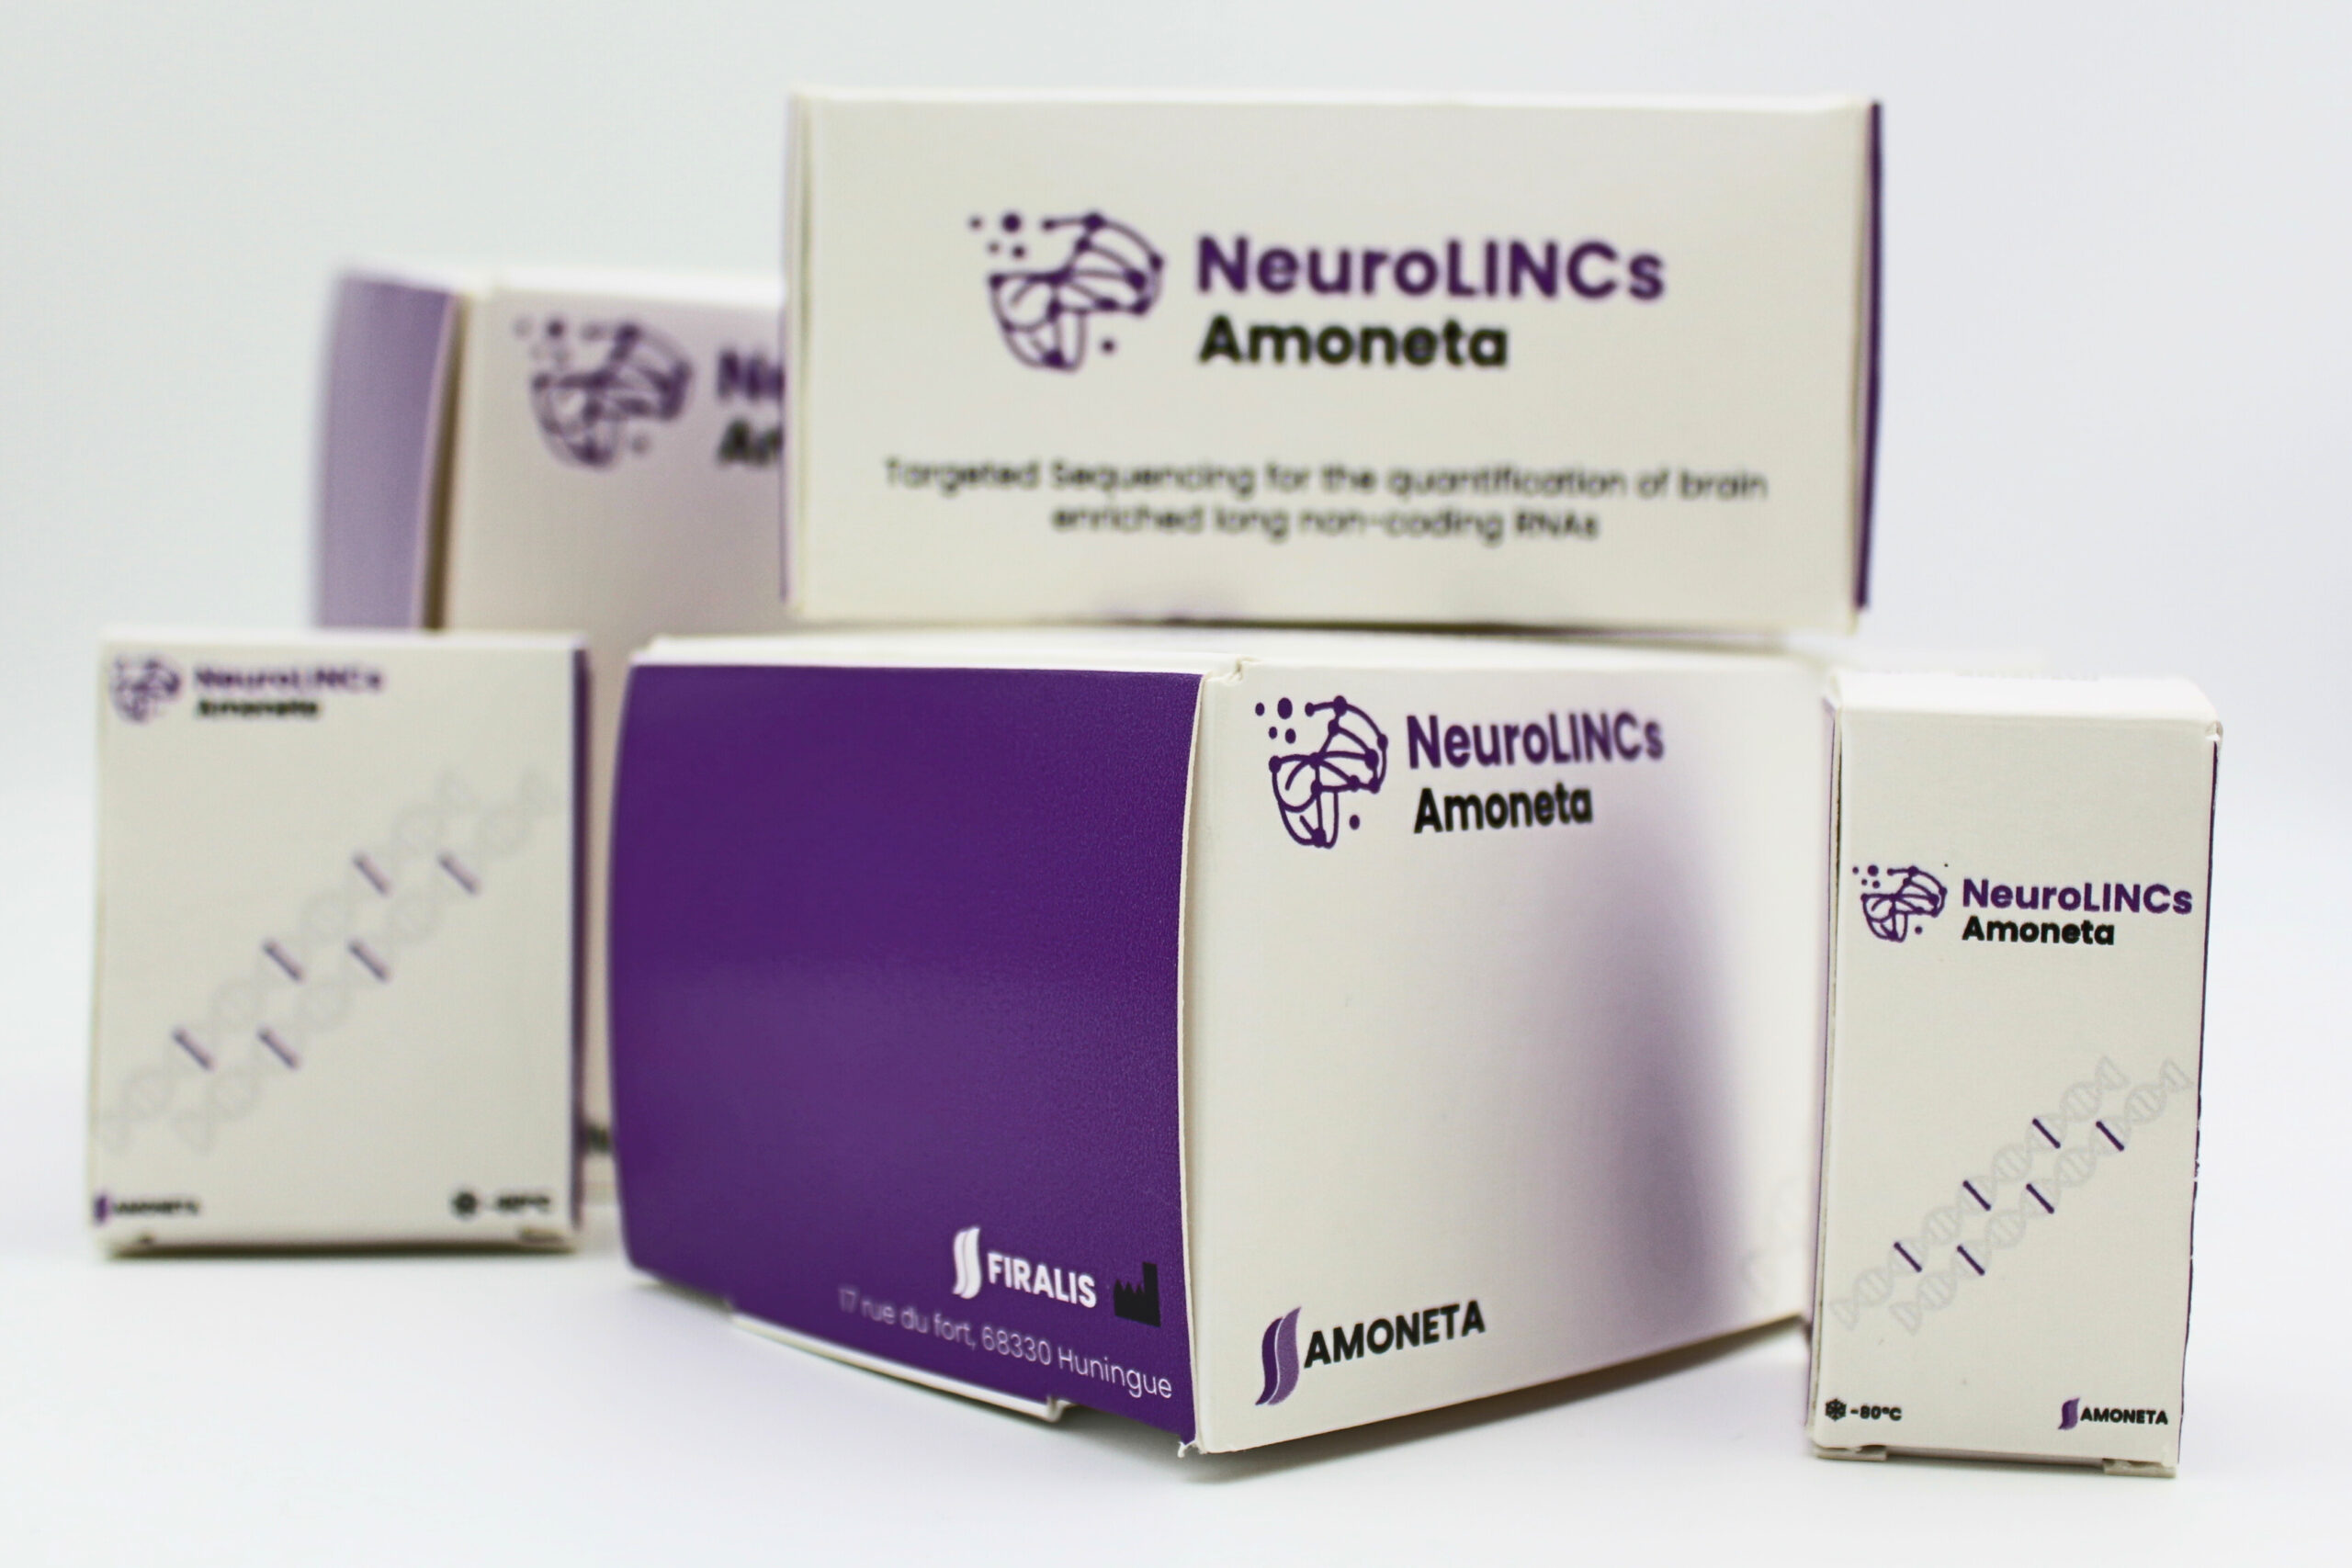 the NeuroLINCs kit